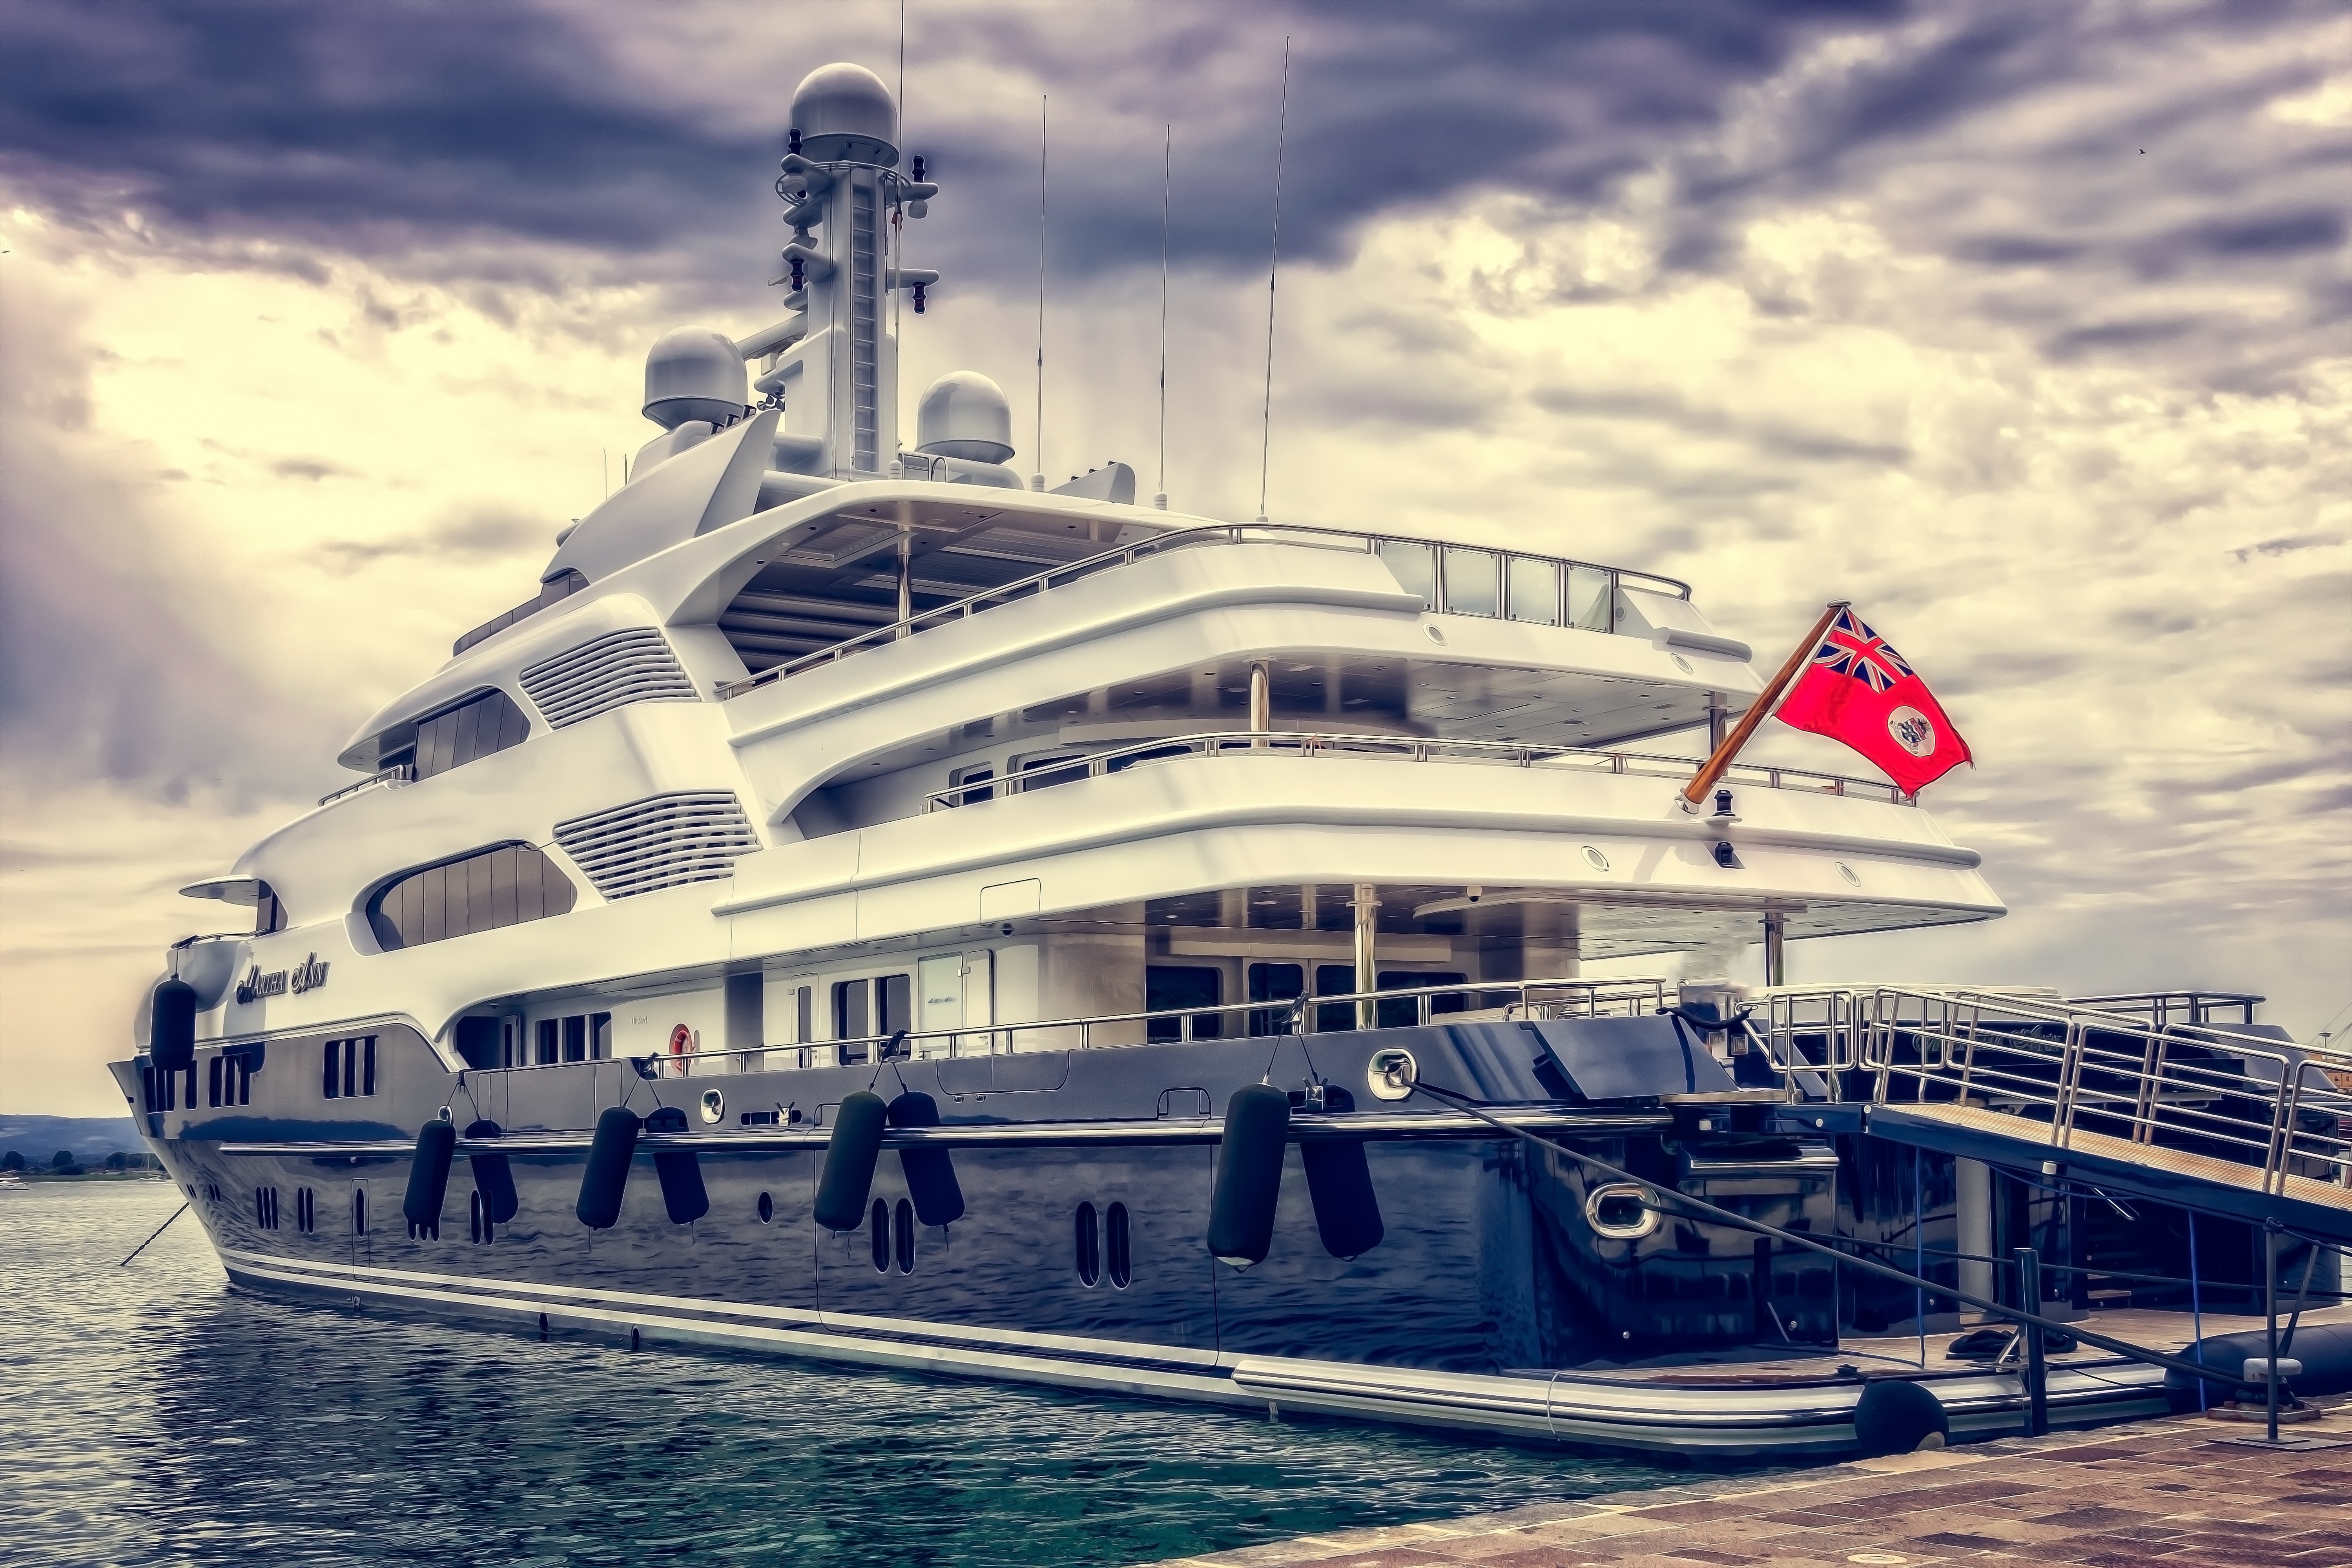 Luxury Yacht by Tama66